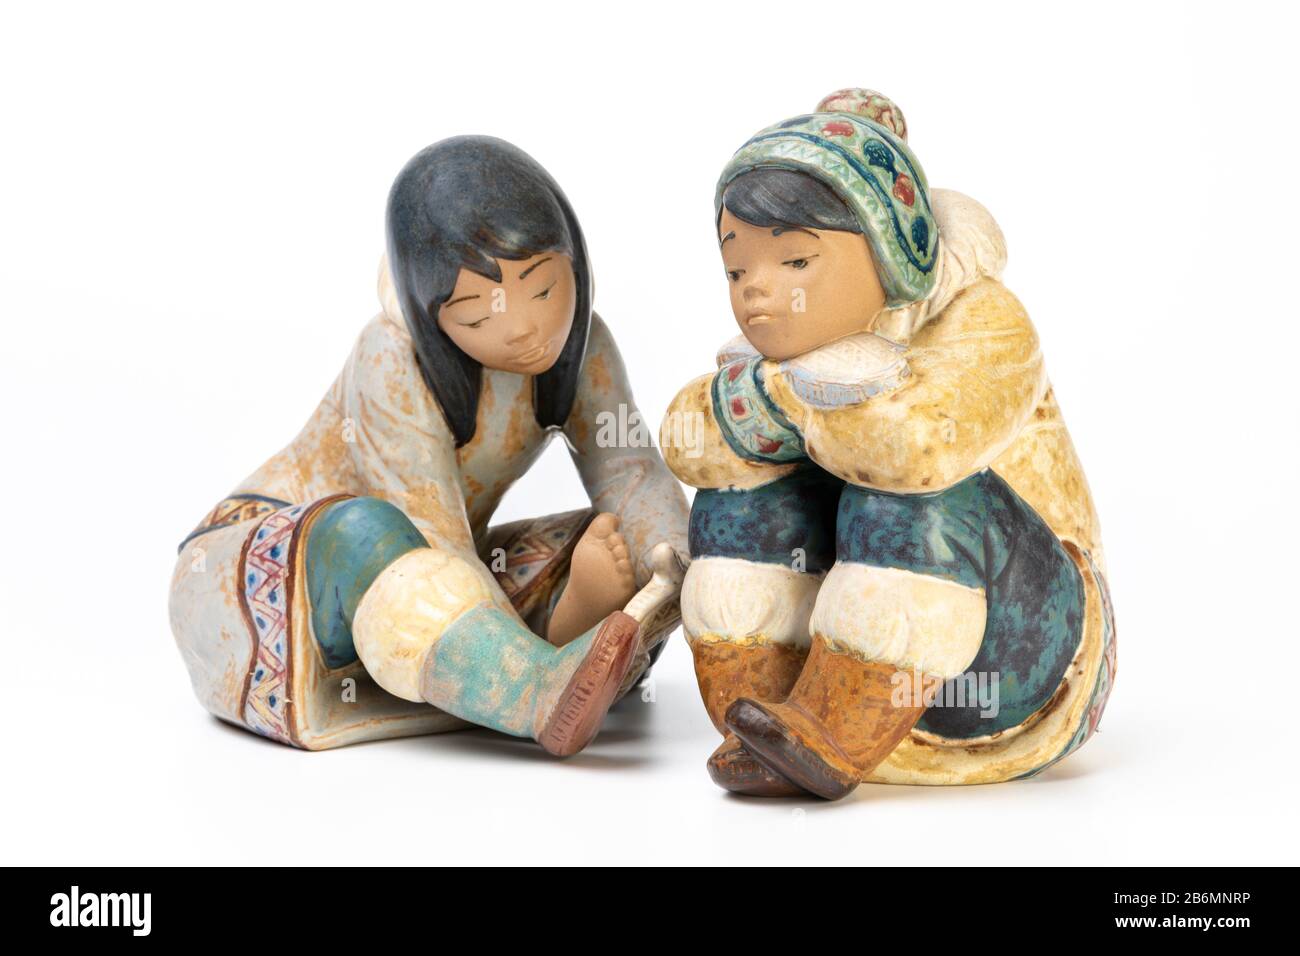 Lladro Inuit figurine Stock Photo